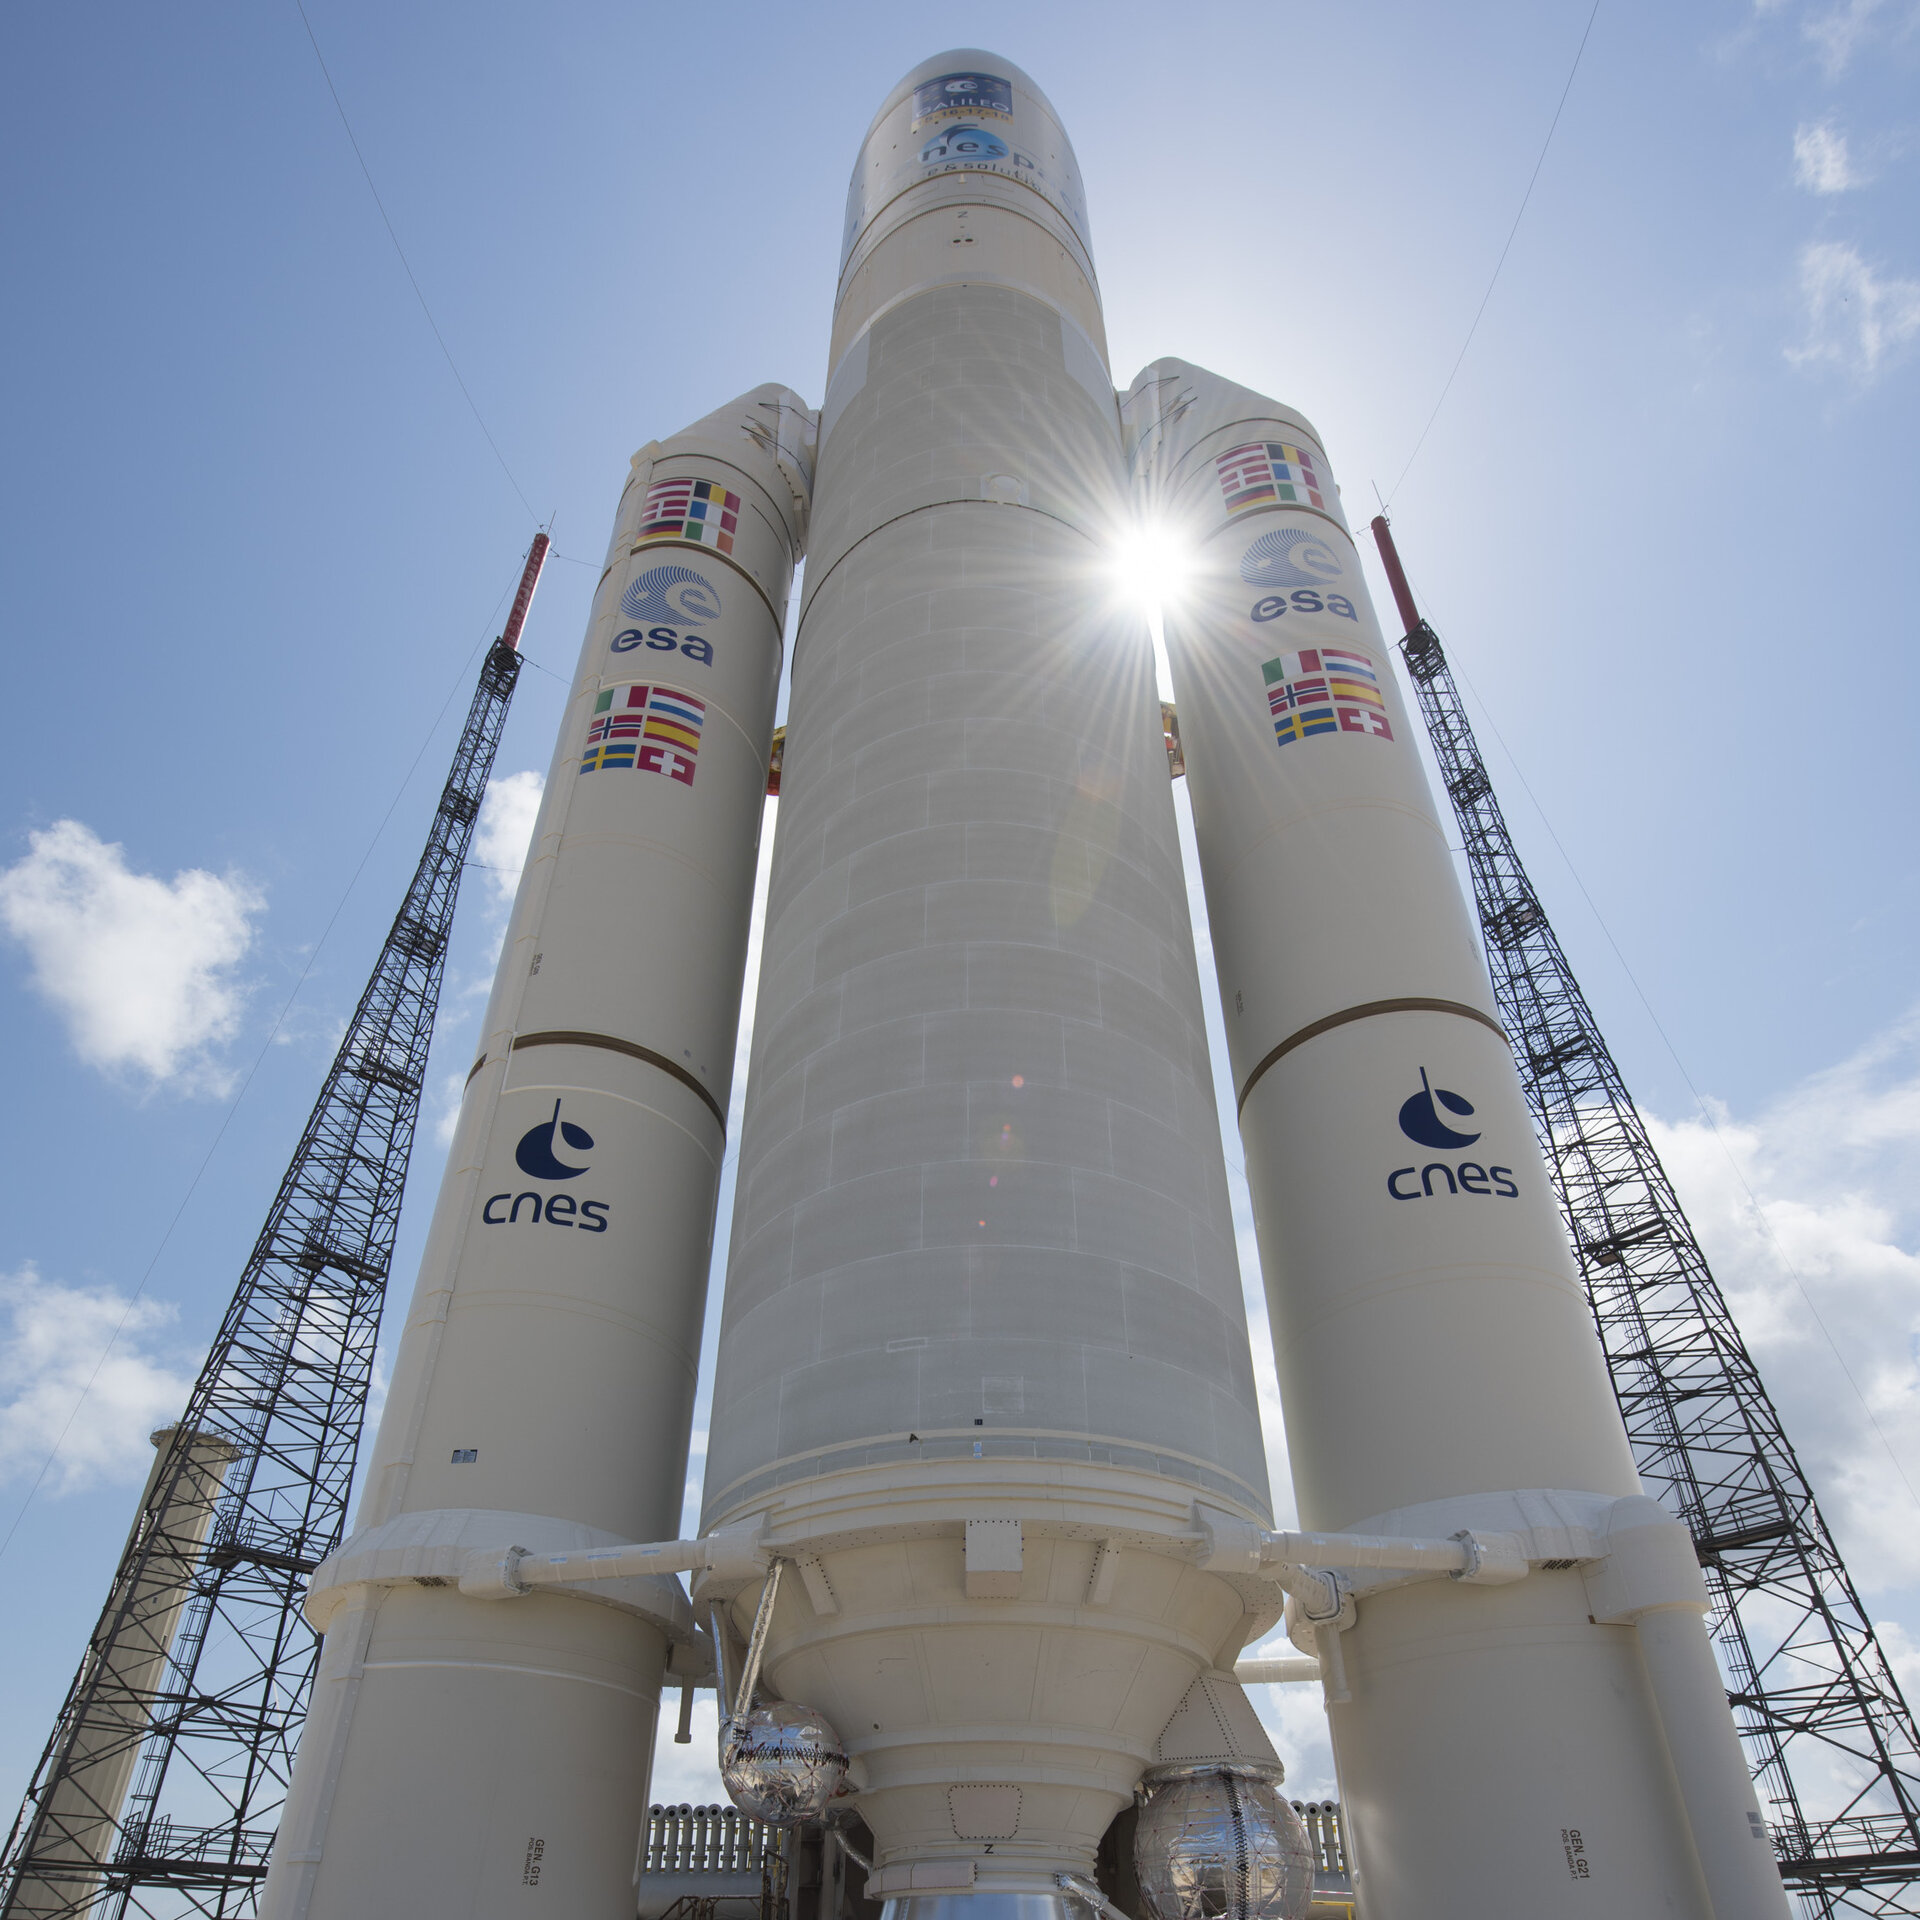 Ariane 5 flight VA233 on launch pad